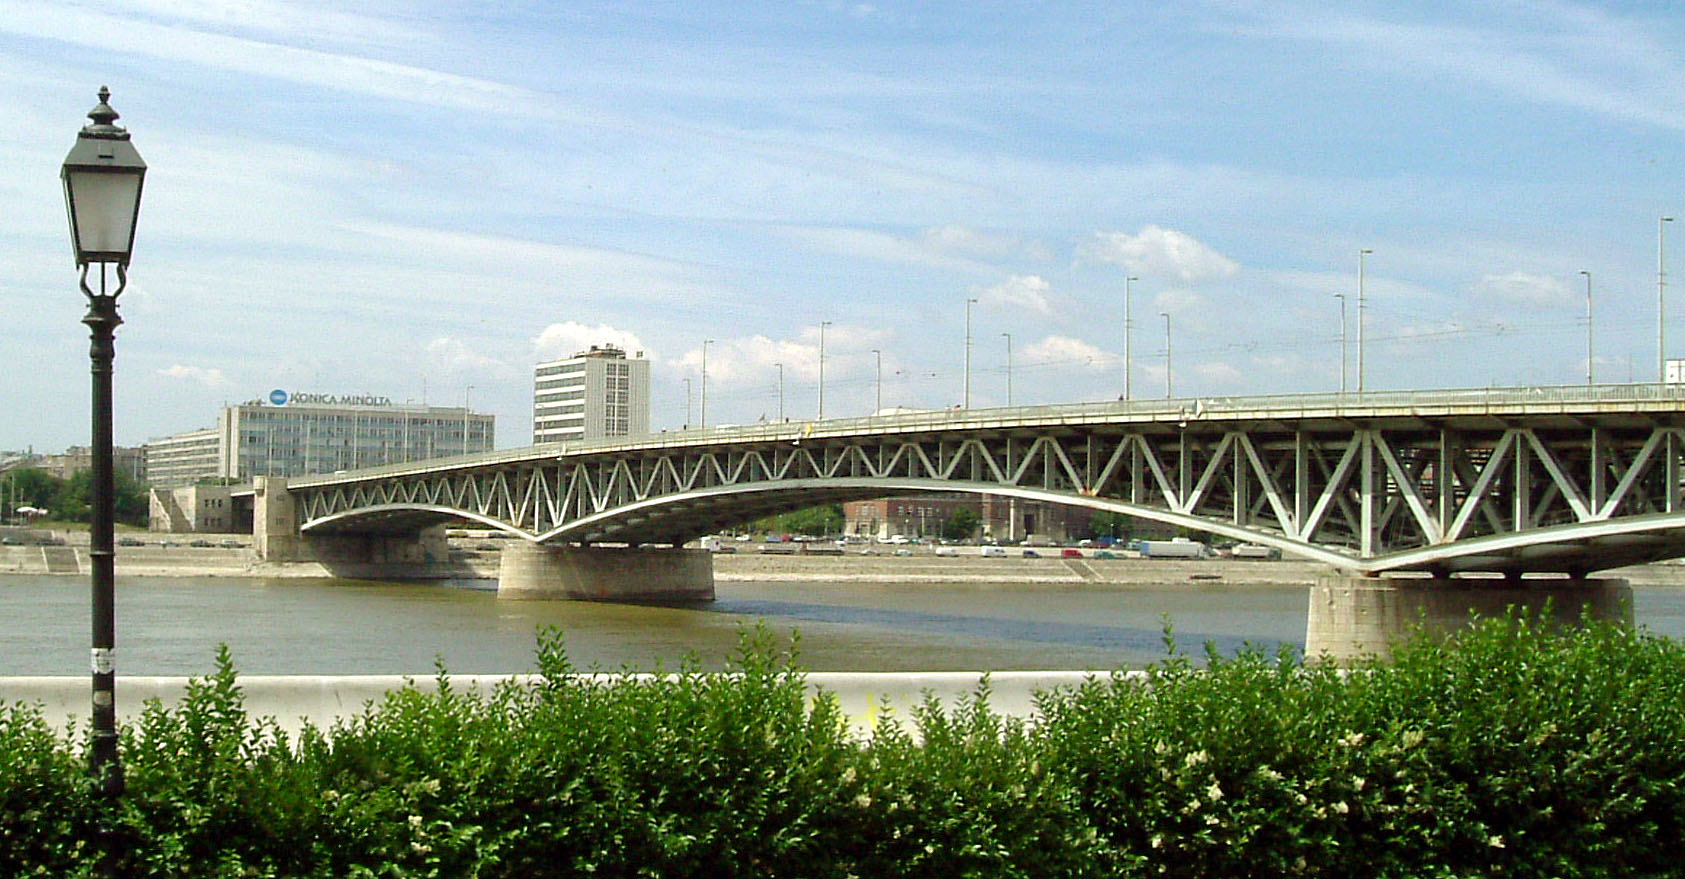 budapest_petofi_bridge.jpg